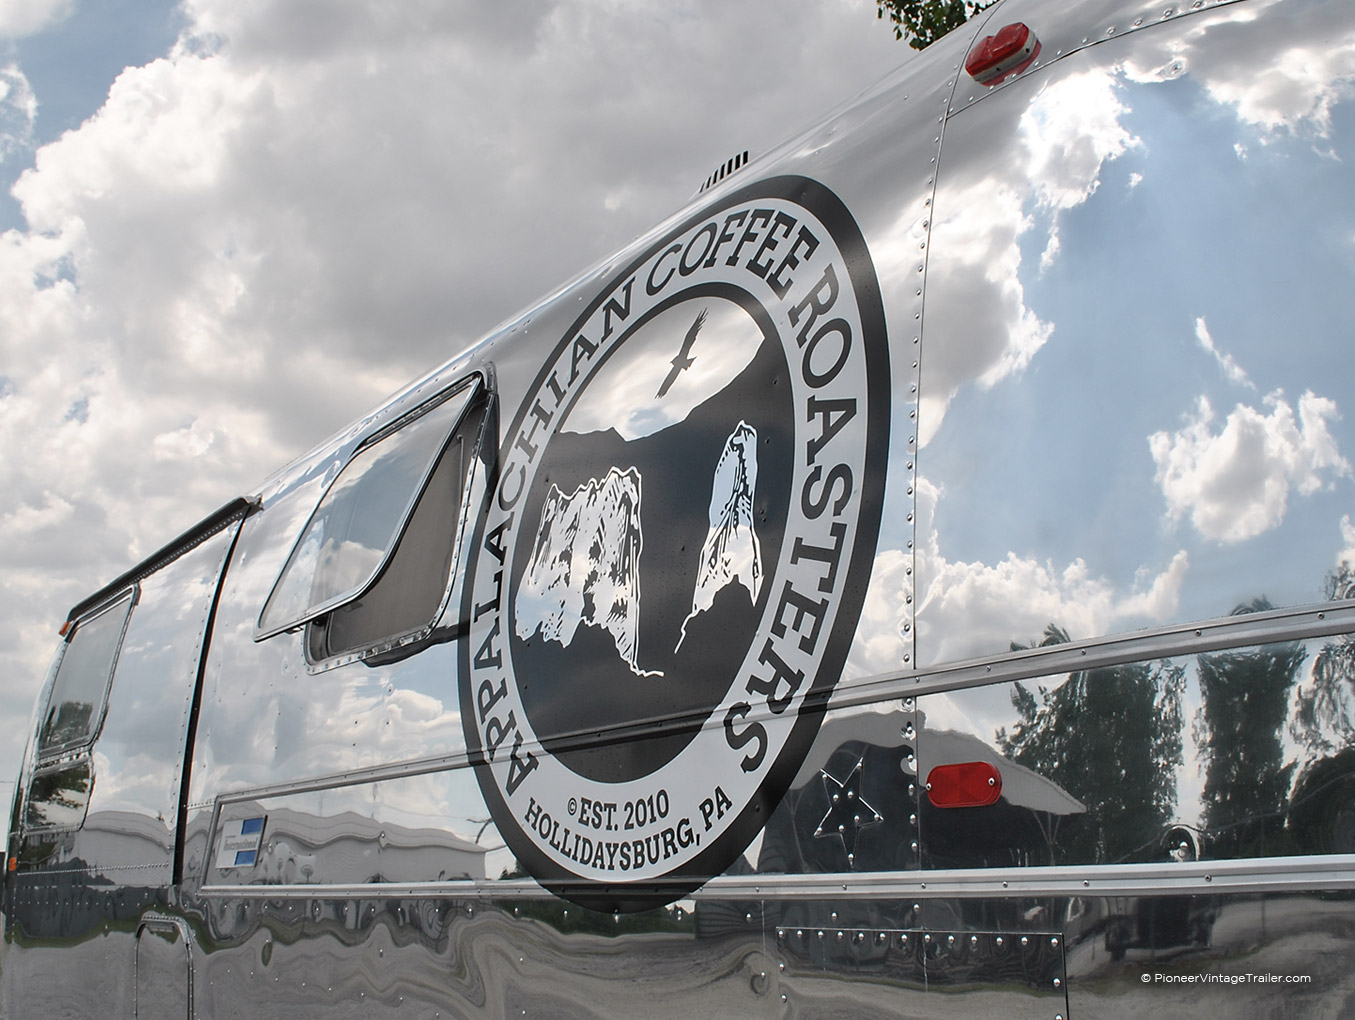 Appalachian Coffee Roasters Airstream with logo on side